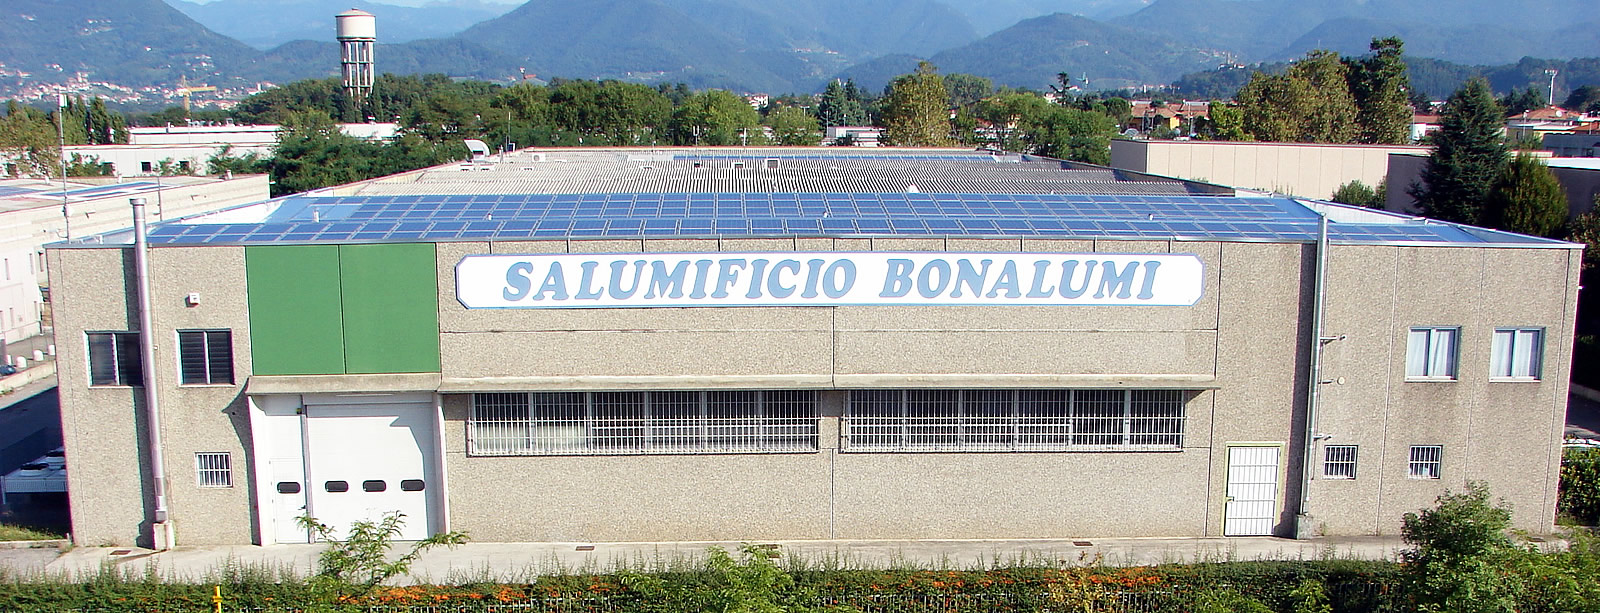 Azienda Bonalumi salumificio Bergamo